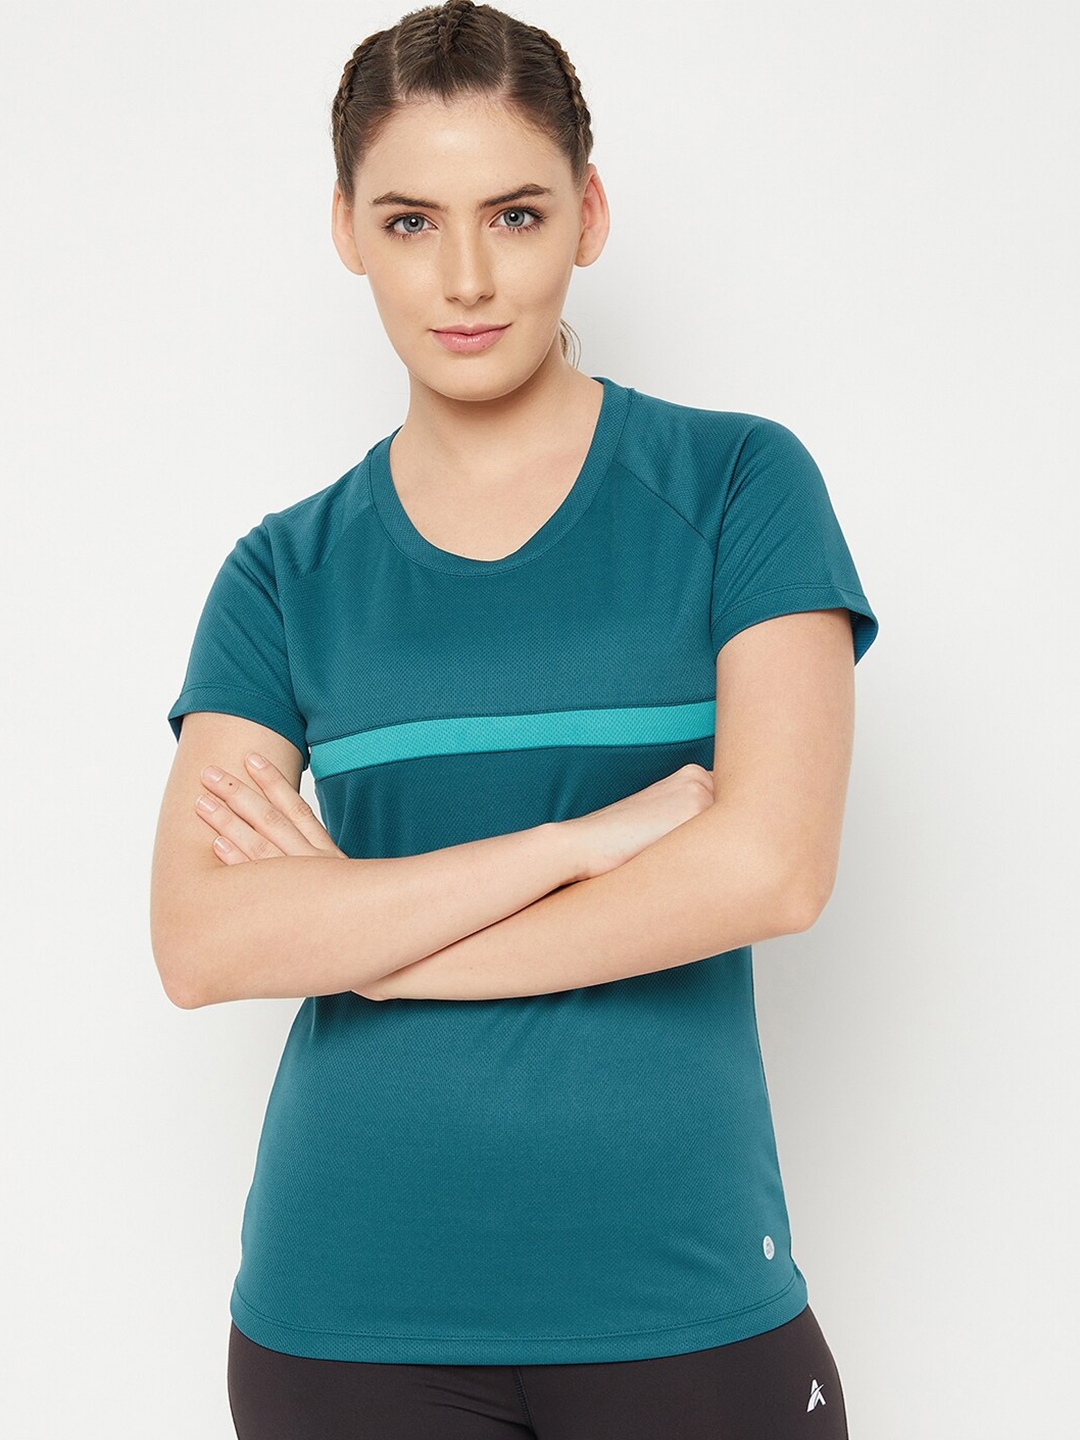 Buy Silvertraq Women Brown Solid Anti Odour Sports CropT Shirt